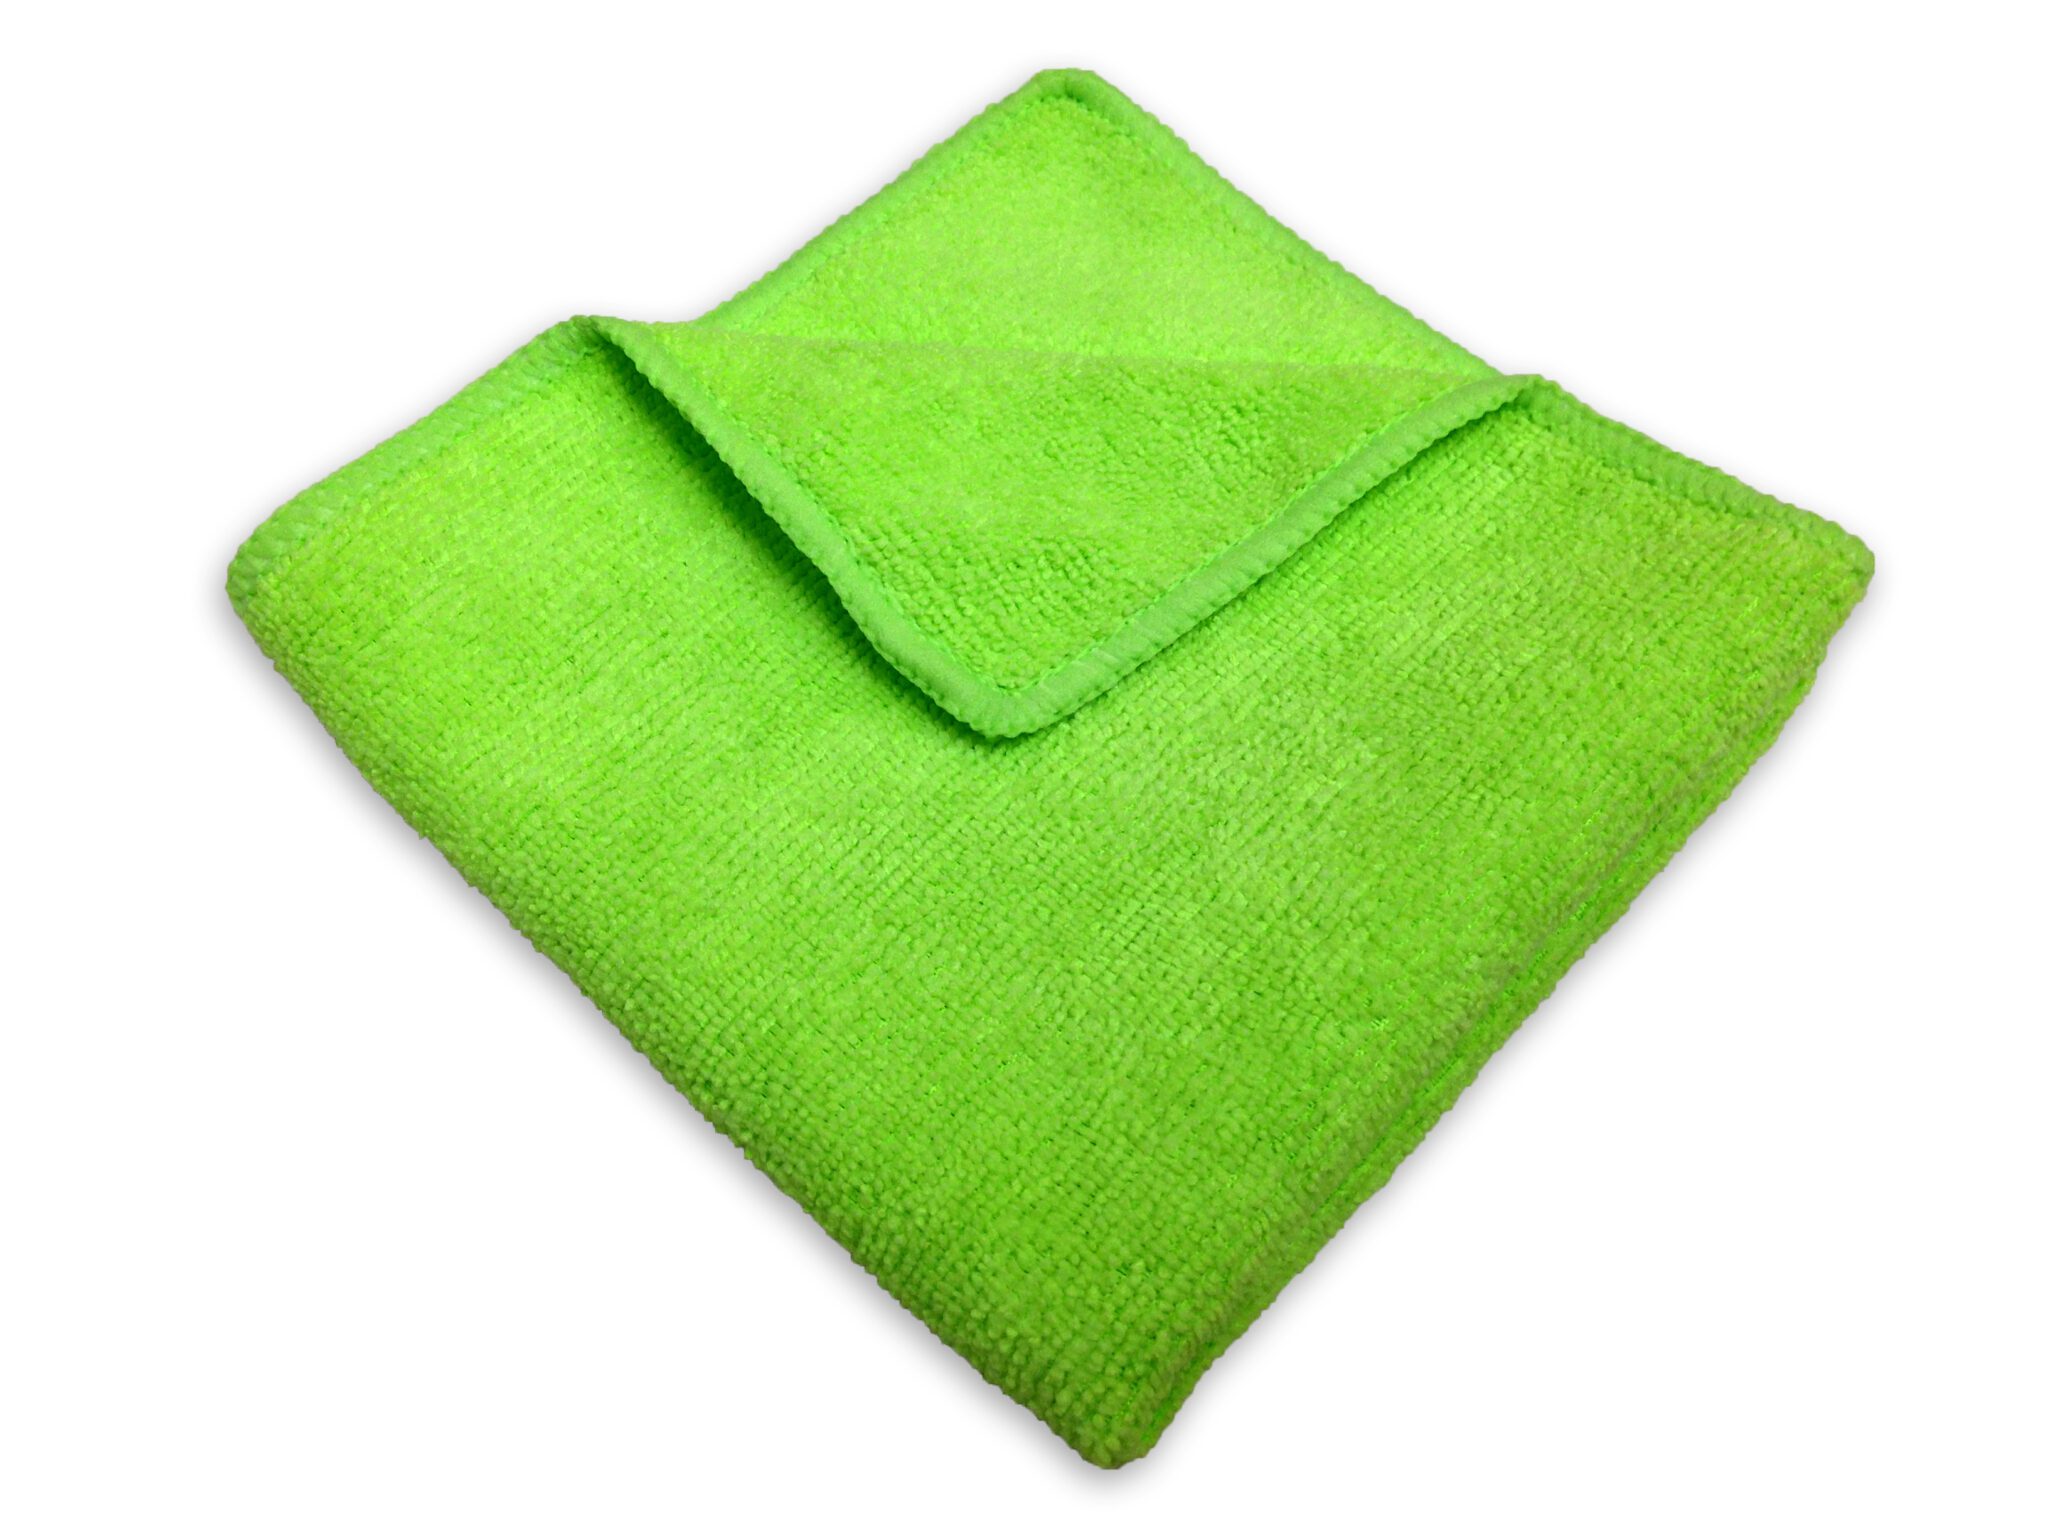 Microfiber Cloth, 12 x 12 x 300gsm, Green - Each or Pack